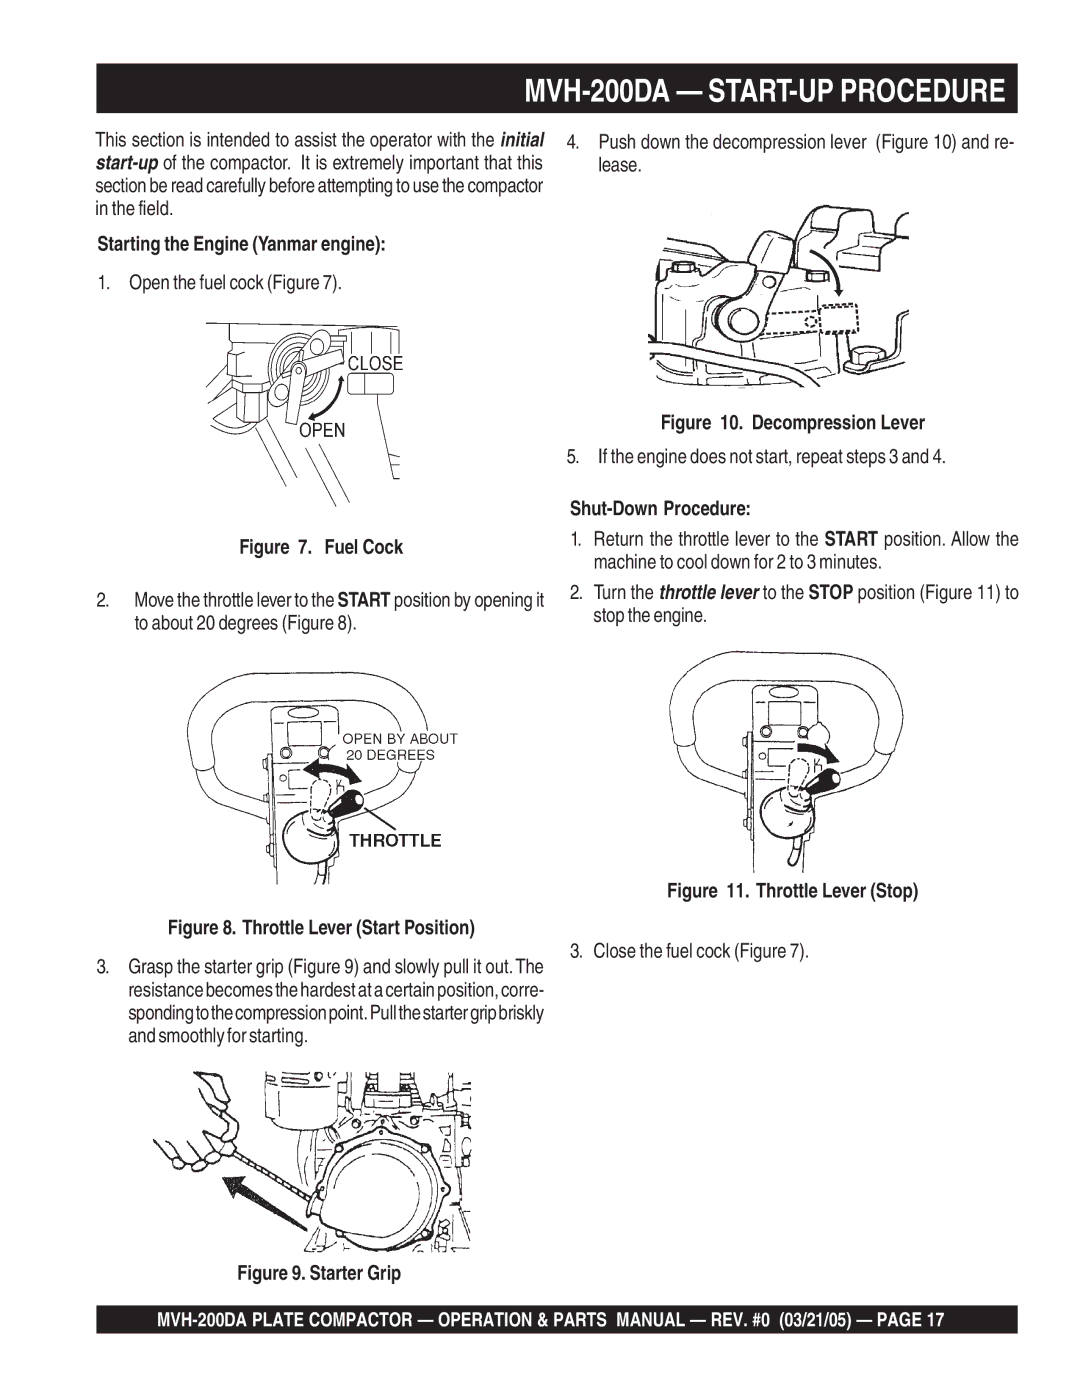 Multiquip MVH-200DA manual Starting the Engine Yanmar engine, Shut-Down Procedure 